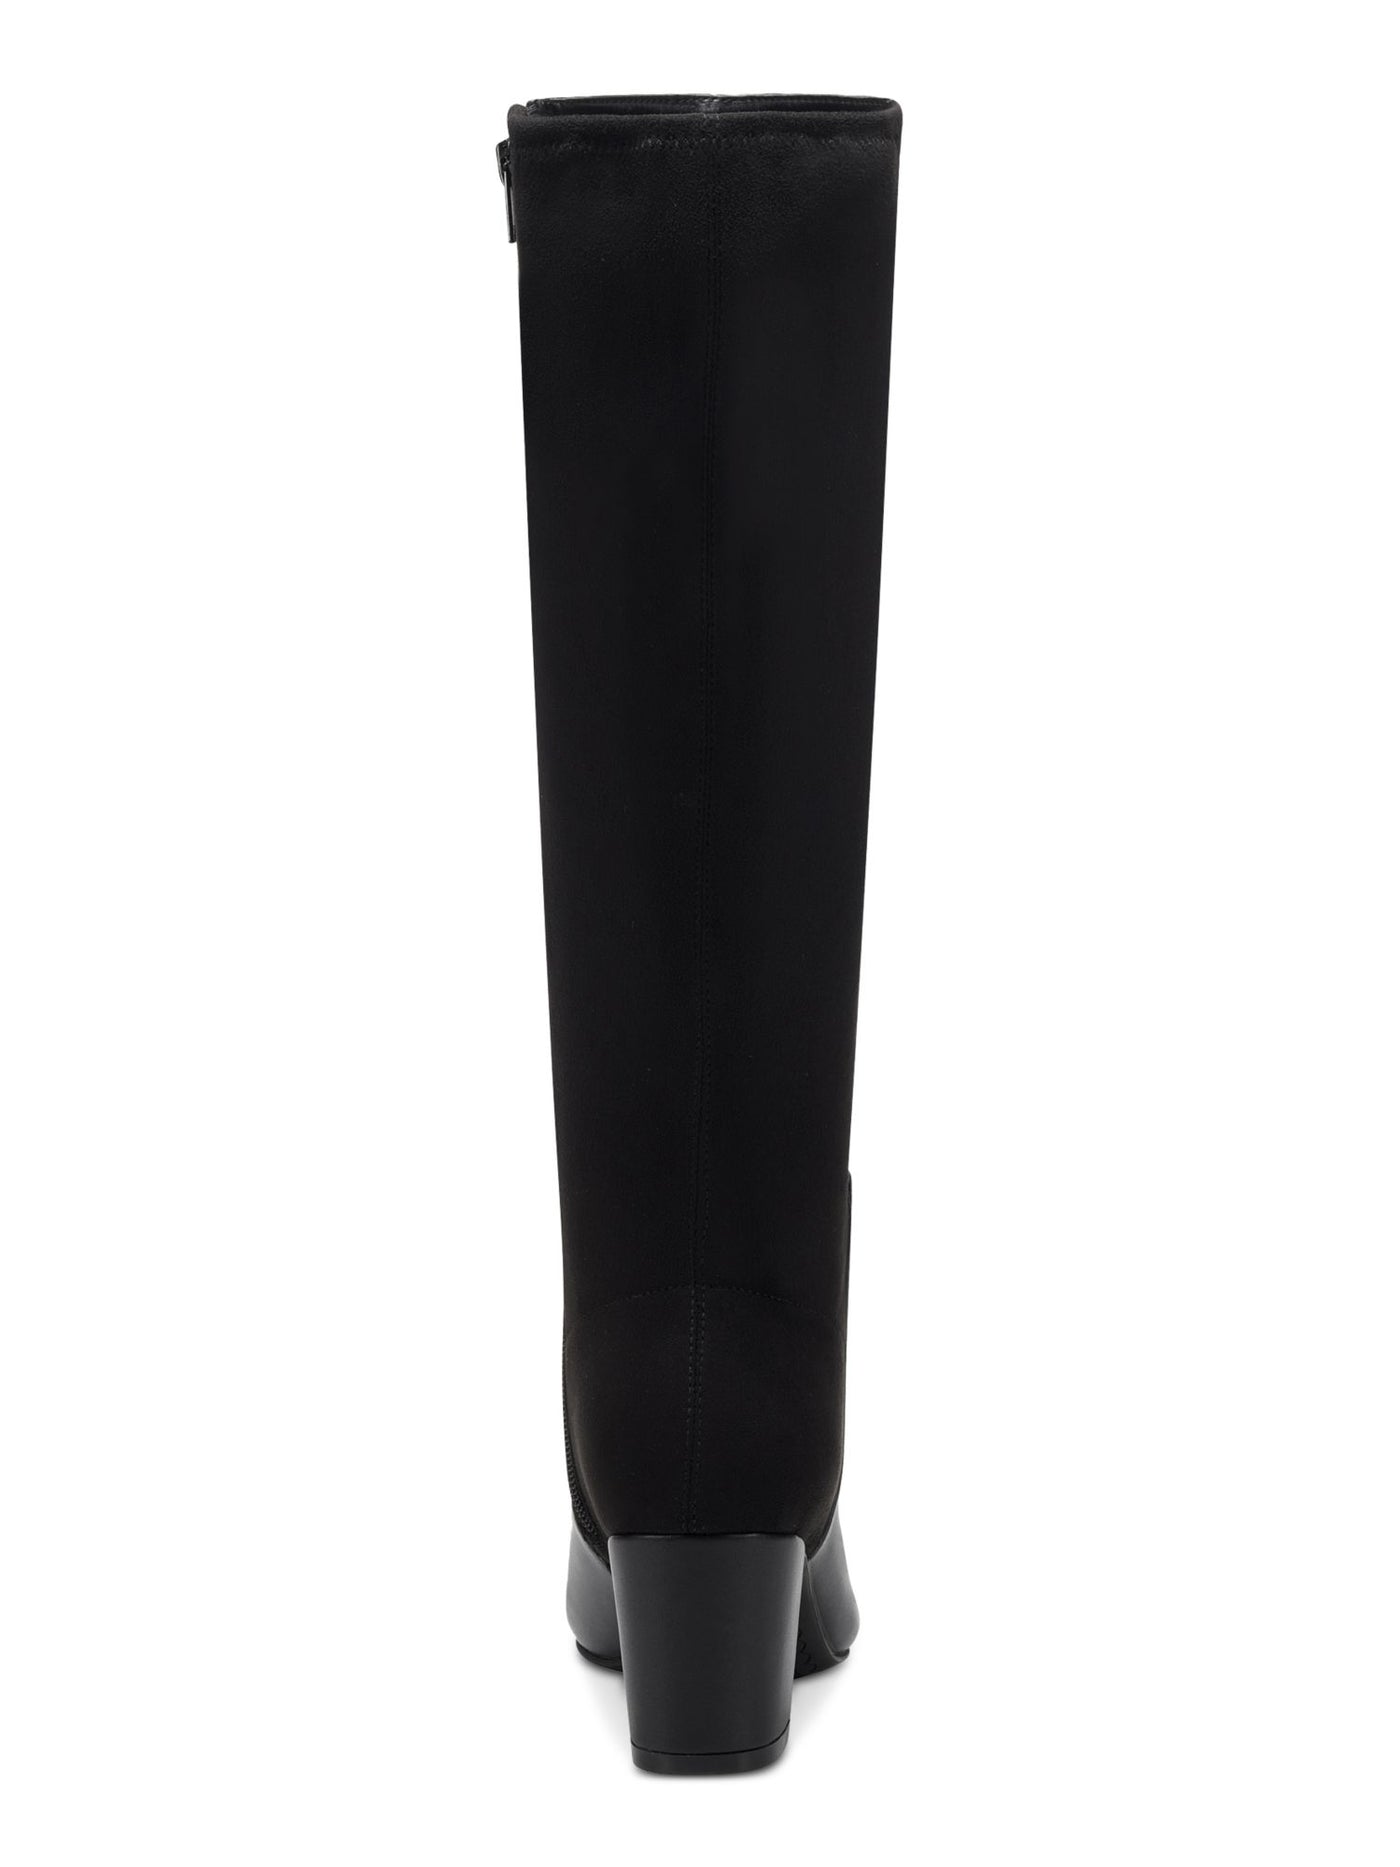 CHARTER CLUB Womens Black Comfort Sacaria Almond Toe Block Heel Zip-Up Dress Boots 9.5 M